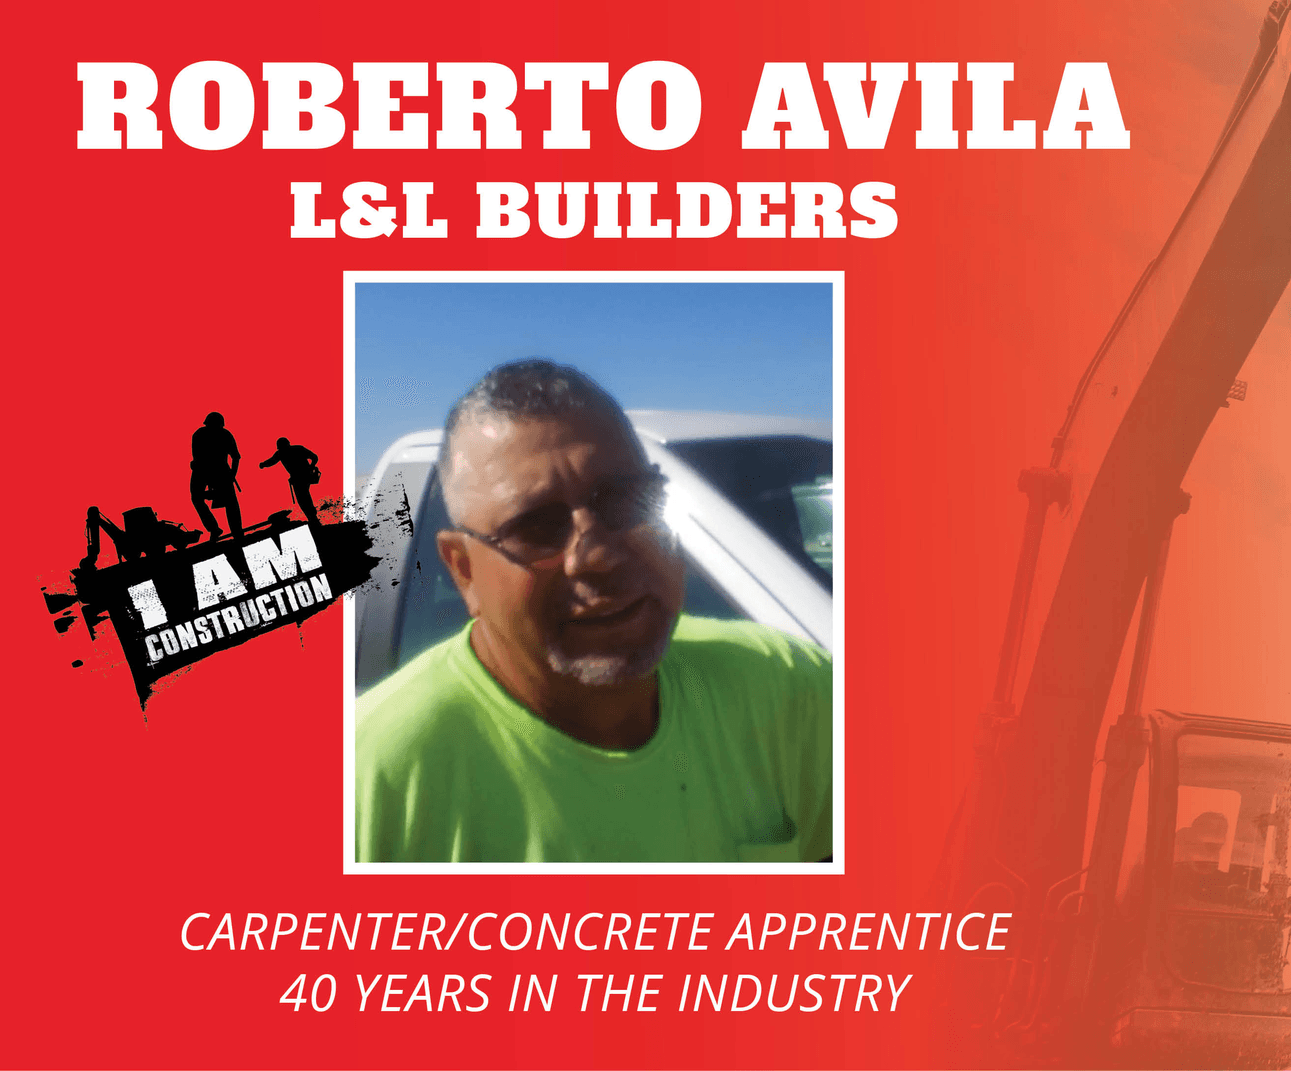 Carpenter Concrete Avila — Sioux City, IA — L&L Builders Co.Field Staff Award — Sioux City, IA — L&L Builders Co.